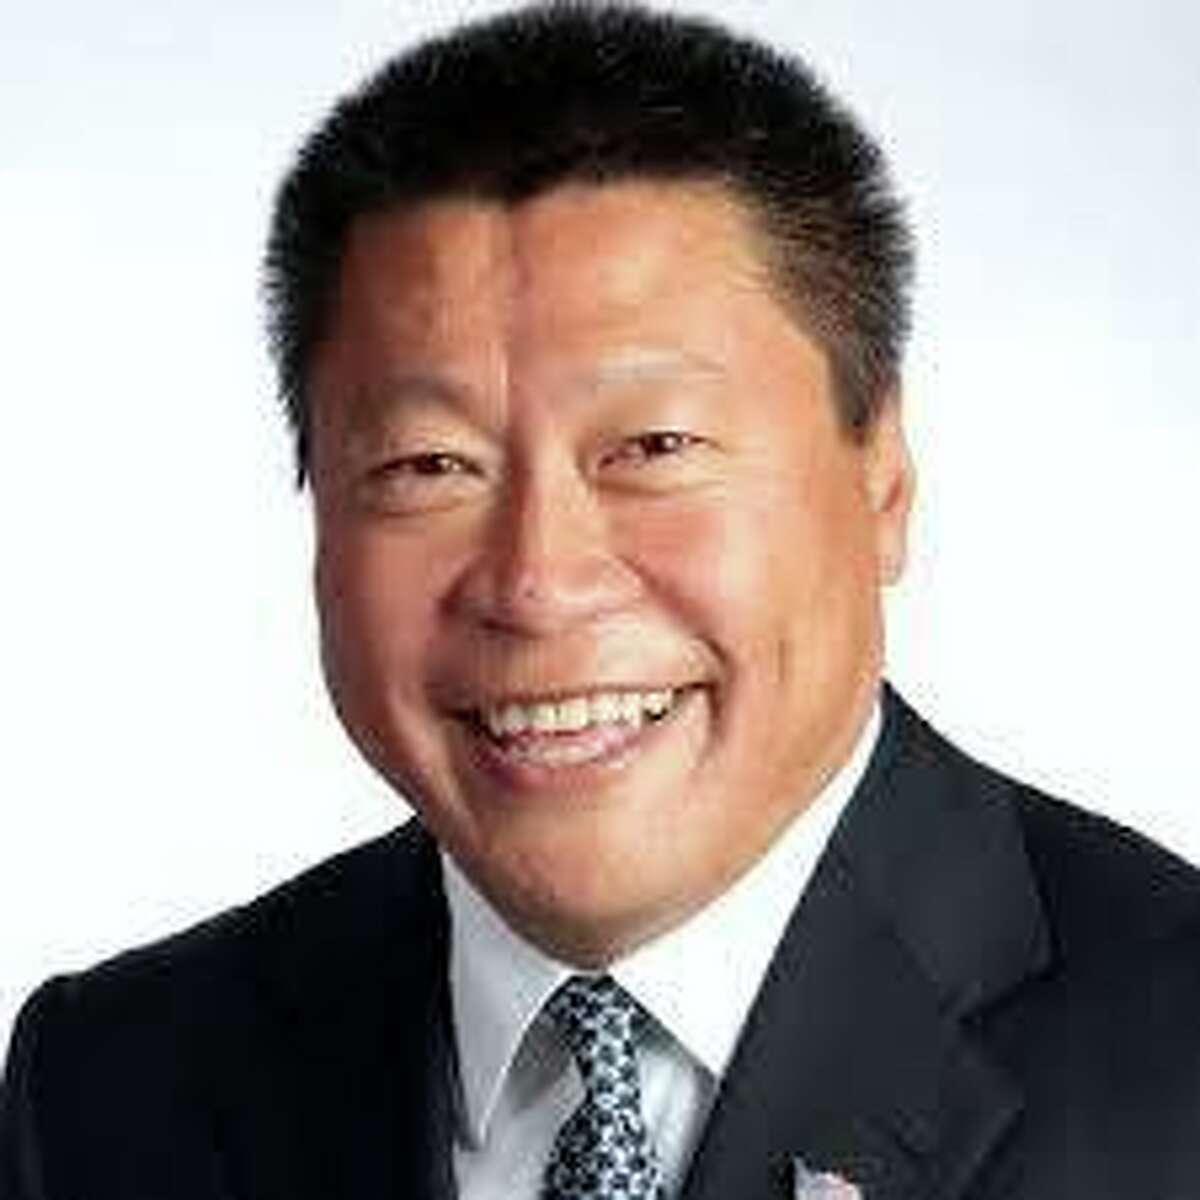 State Sen. Tony Hwang, R-Fairfield, the top Republican on the legislative Public Health Committee.